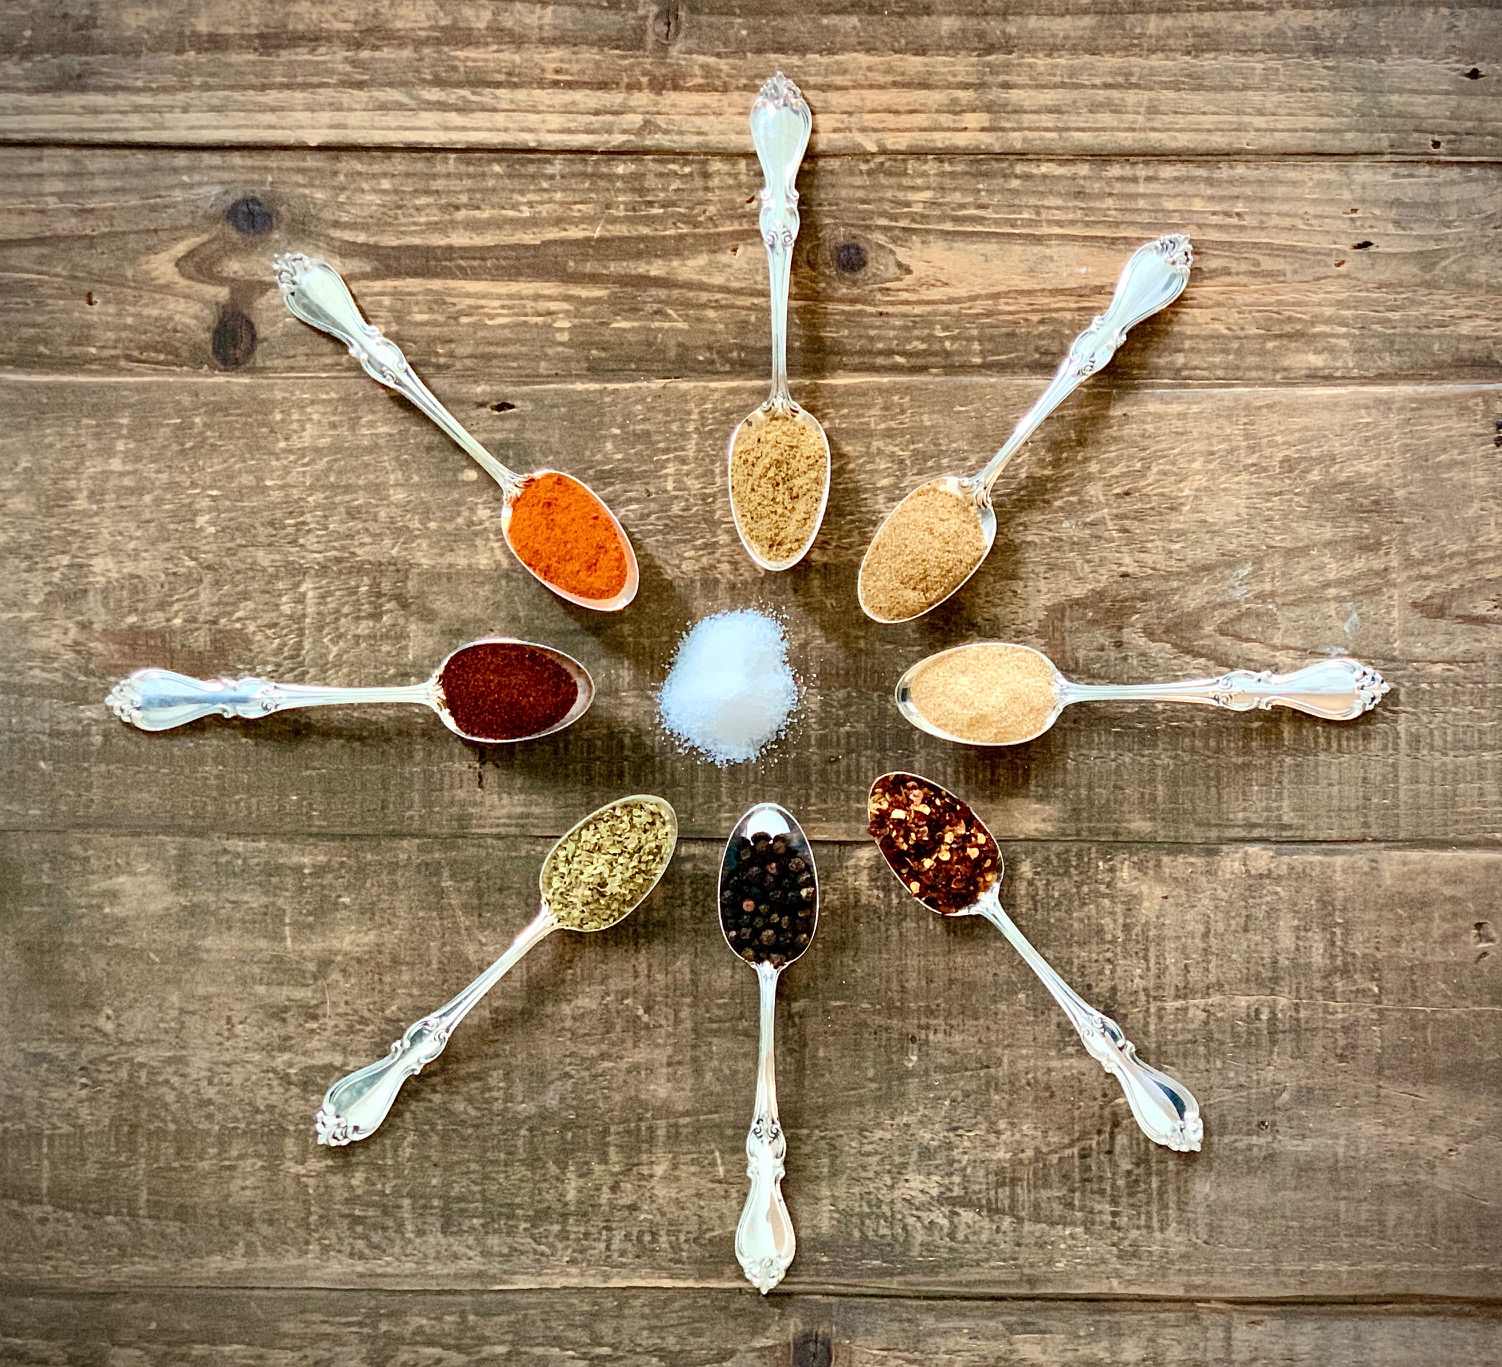 Potlatch Seasoning Ingredients on spoons on wooden board